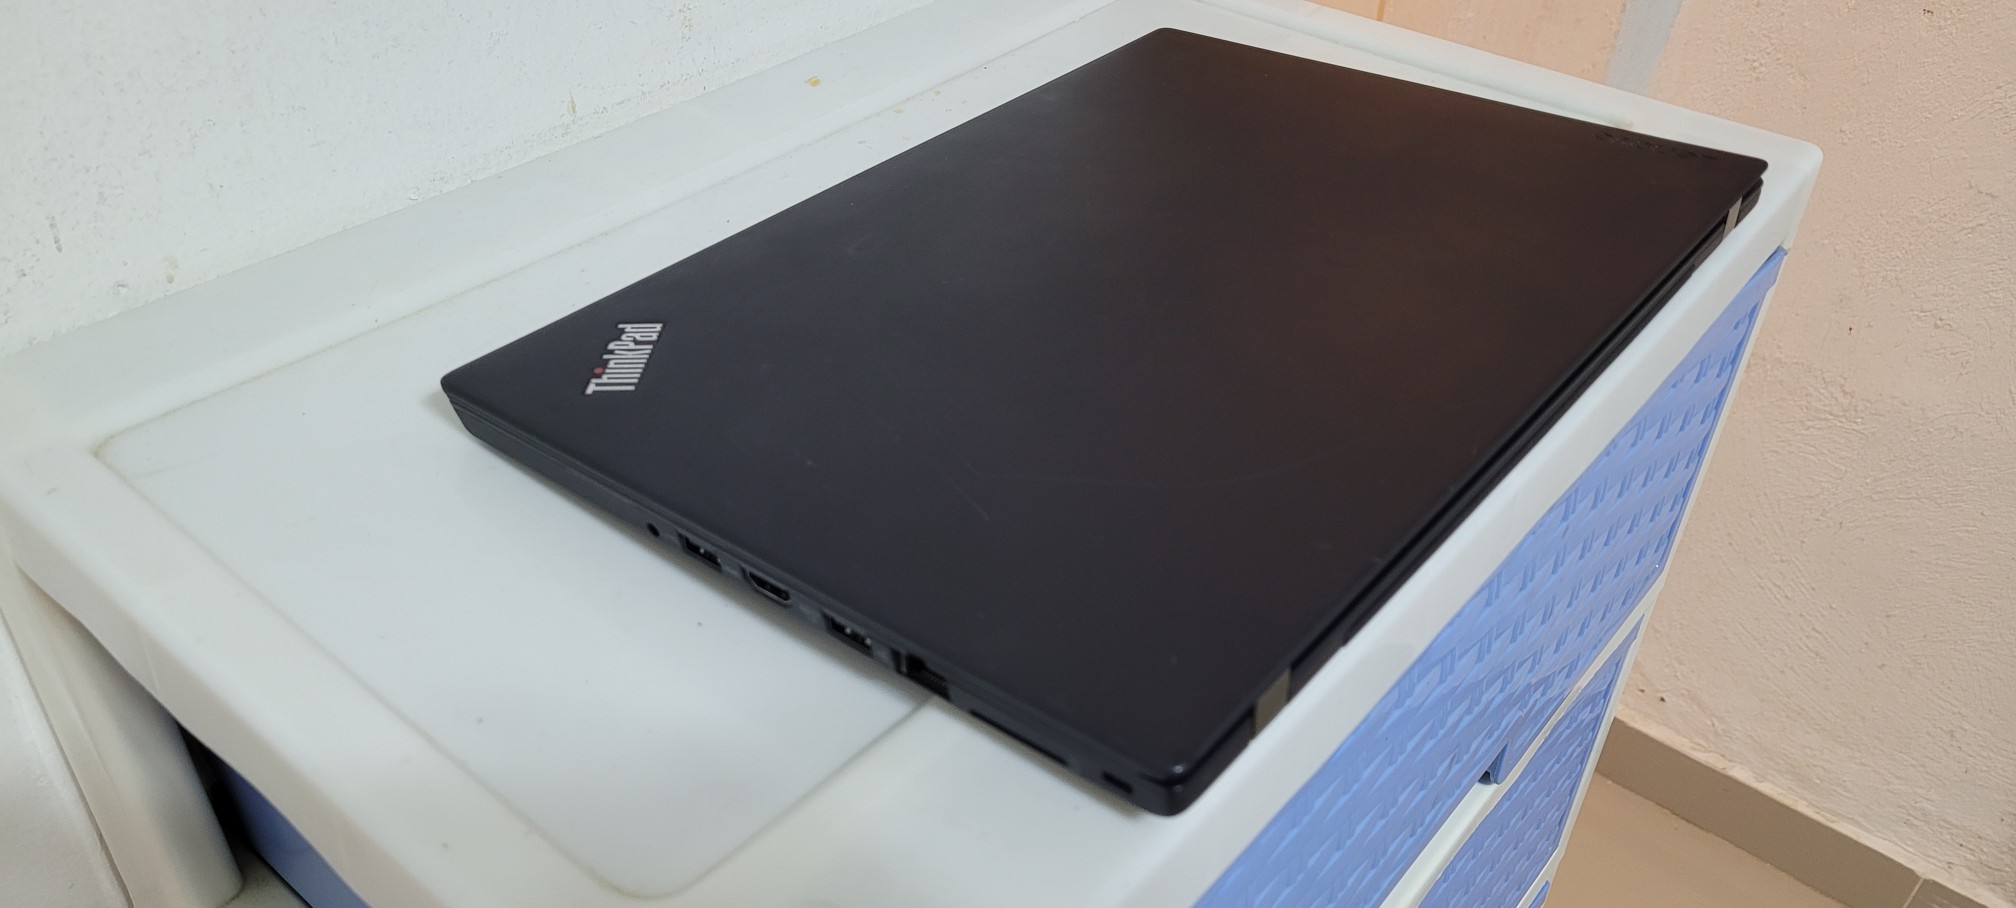 computadoras y laptops - Laptop lenovo T460 14 Pulg Core i5 6ta Gen Ram 8gb ddr4 Disco 256gb SSD Solido 2